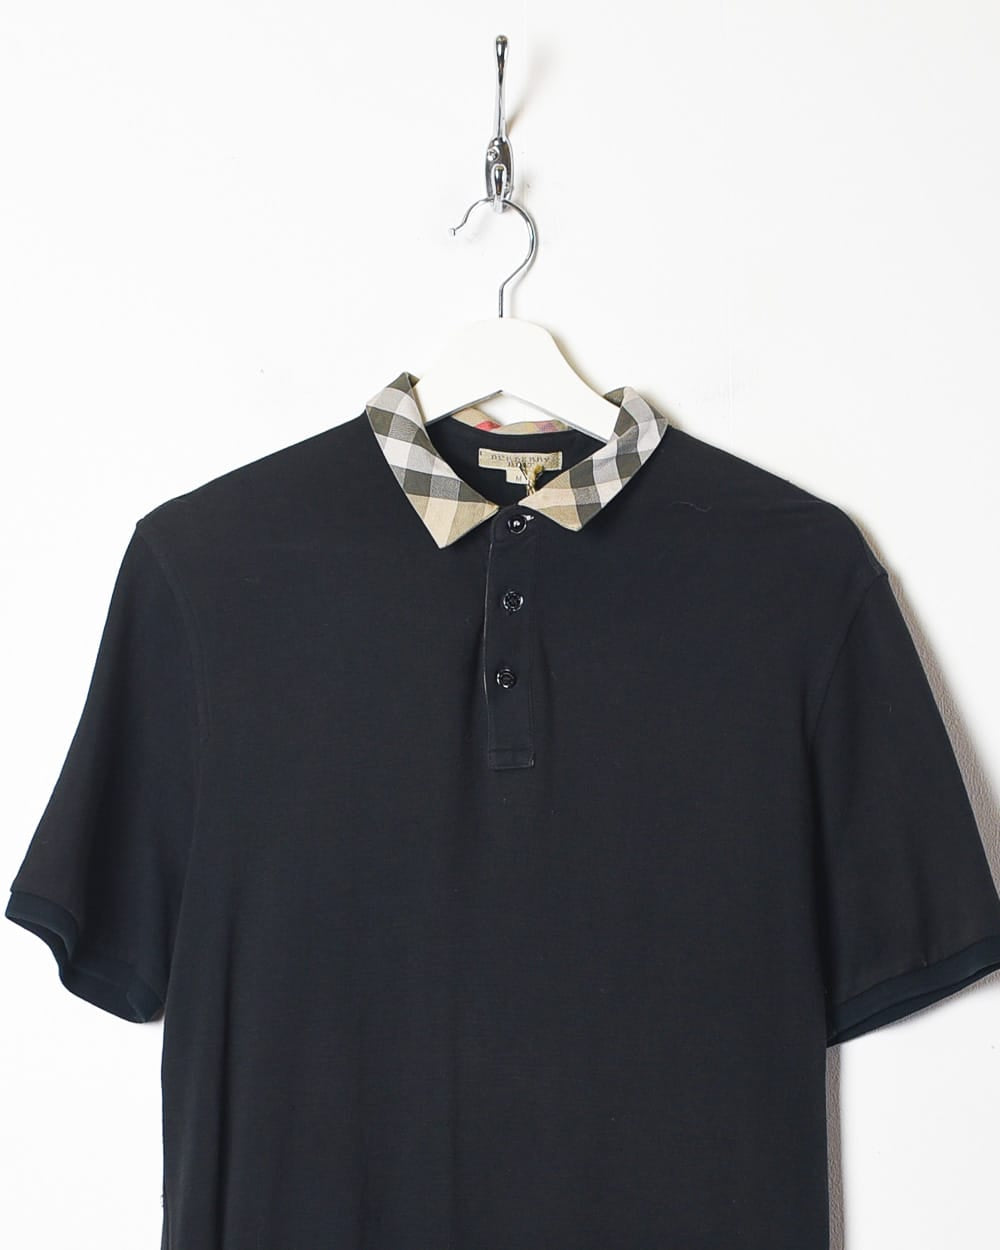 Black Burberry Brit Polo Shirt - Medium Women's